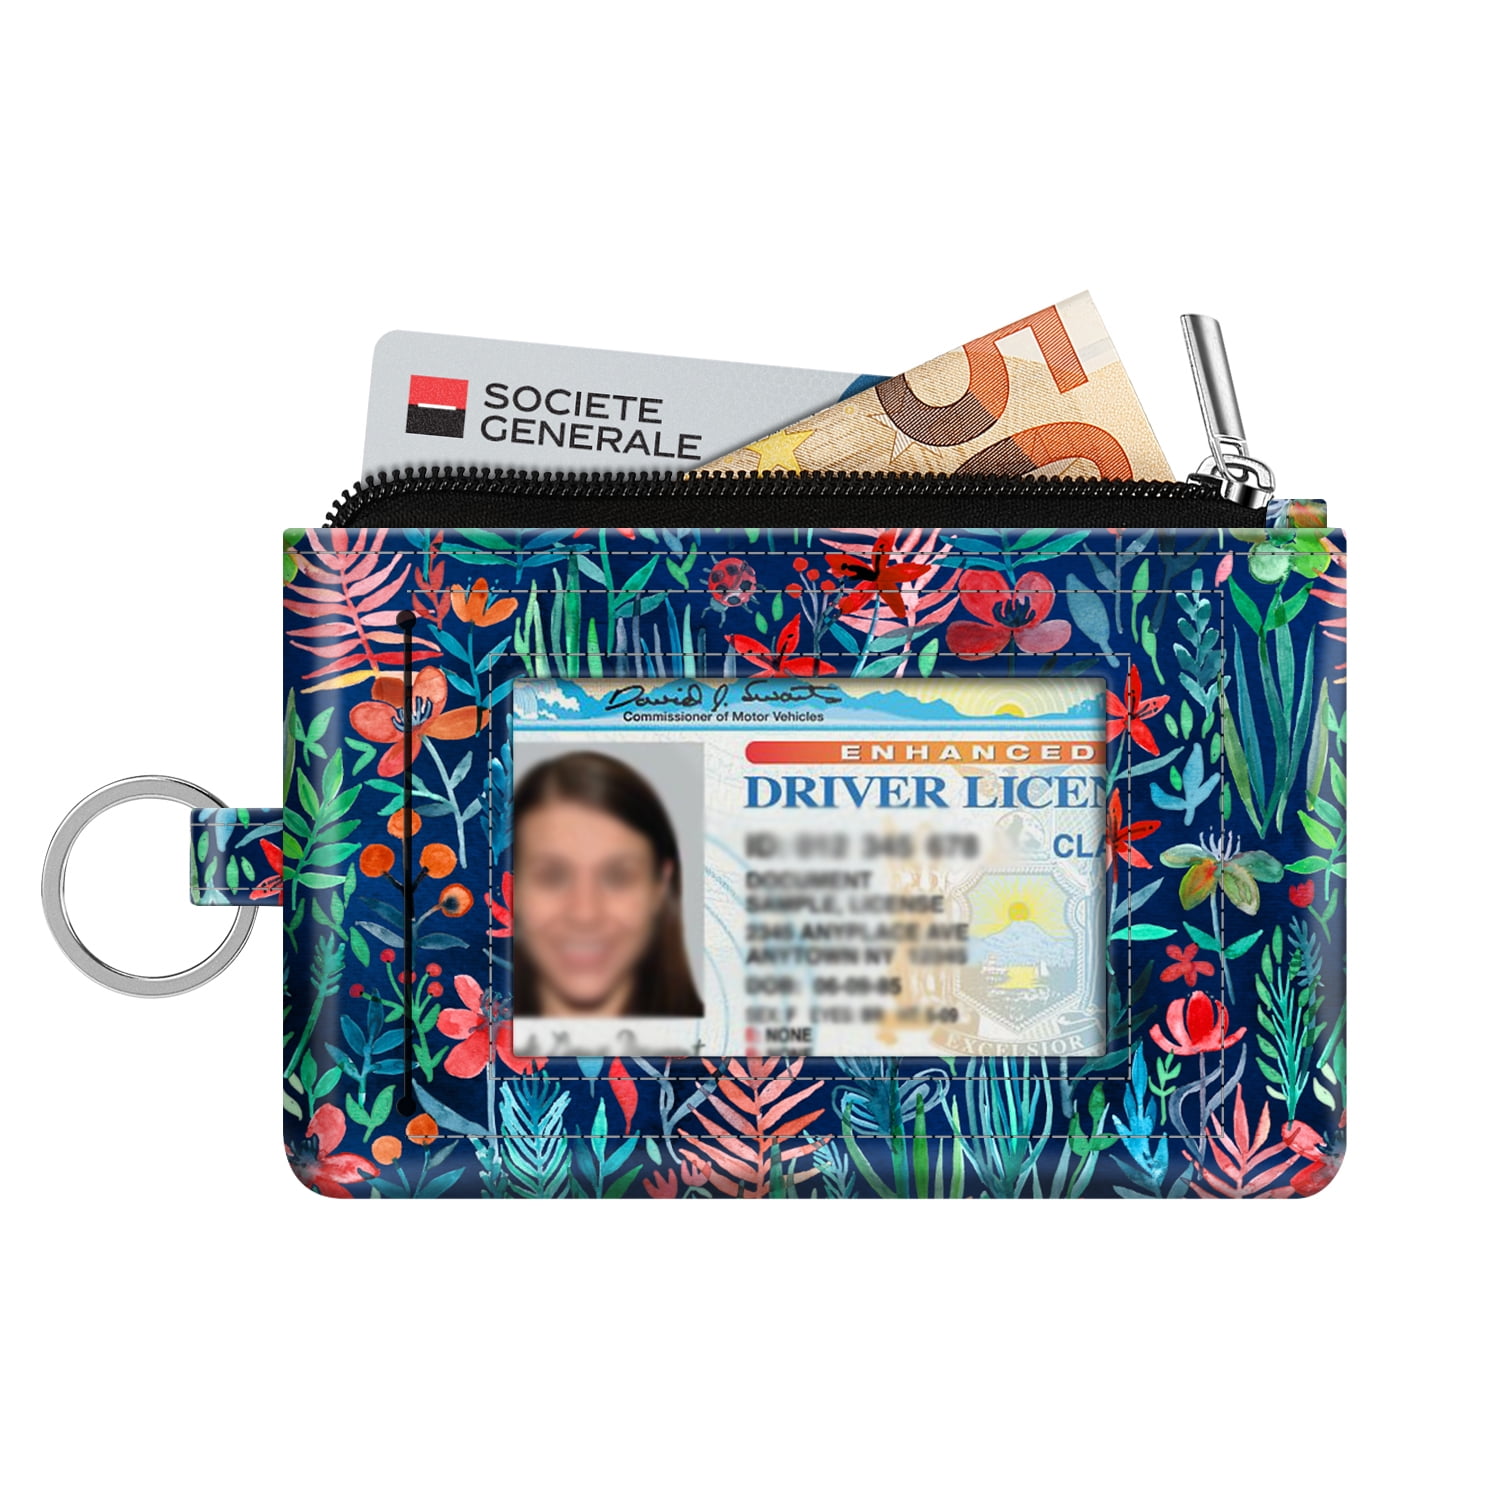 QWZNDZGR Hot Brand Soft Leather Mini Women Card Holder Cute Credit ID Card  Holders Zipper Slim Wallet Case Change Coin Purse Keychain